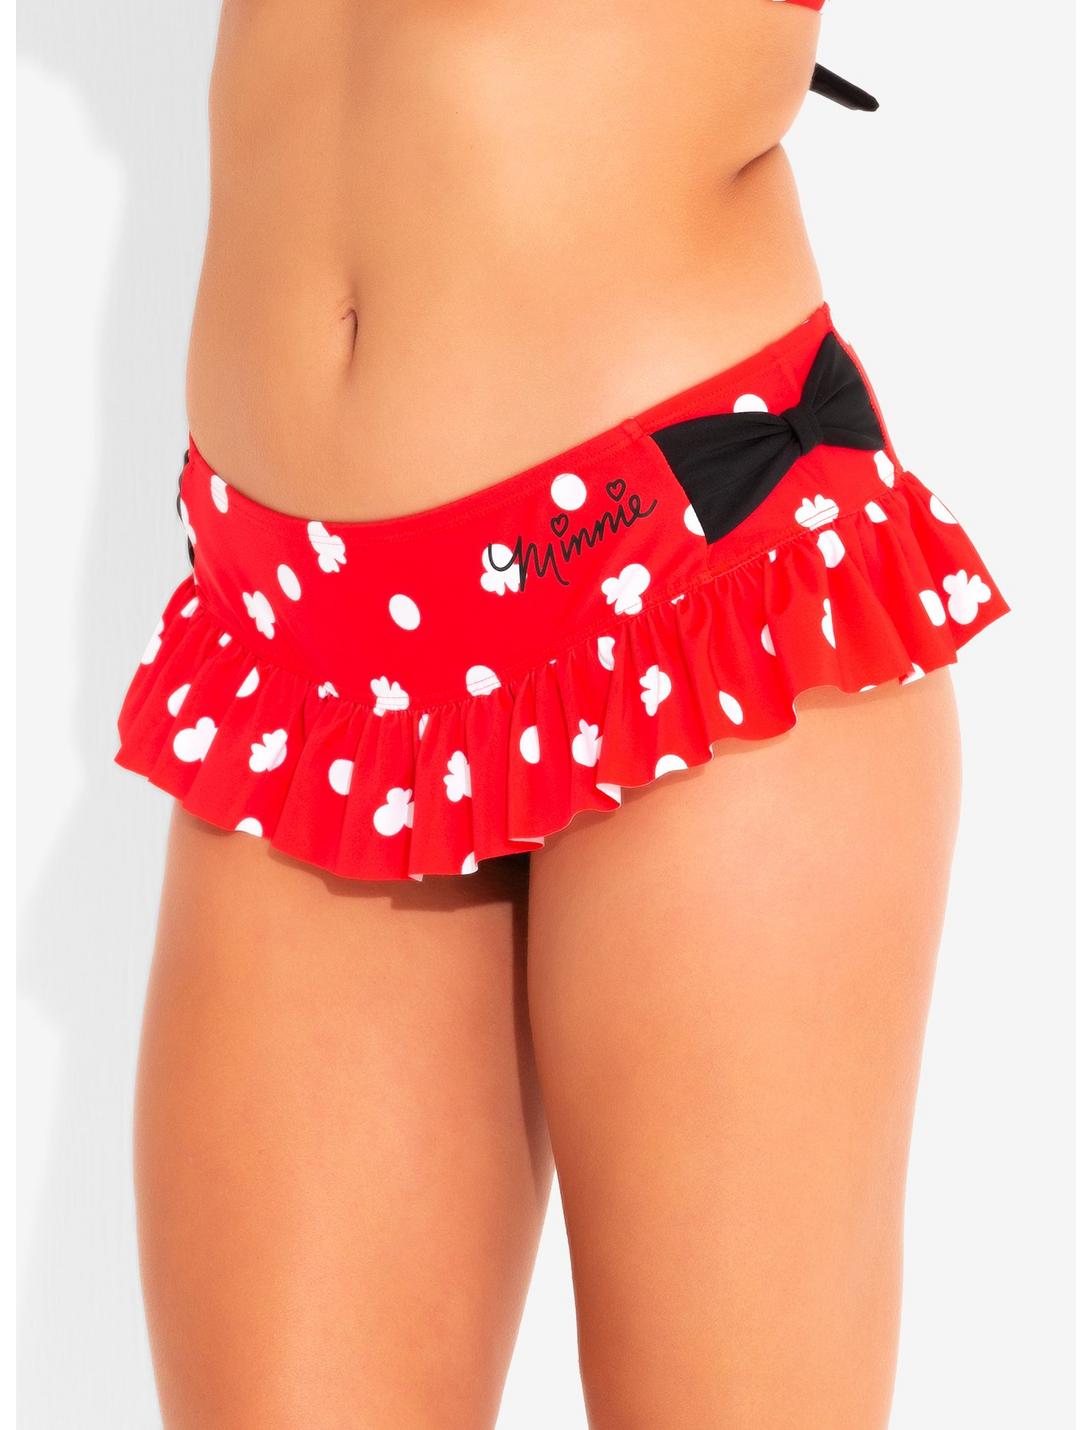 Disney Minnie Mouse Polka Dot Skirted Swim Bottoms, RED  WHITE  BLACK, hi-res